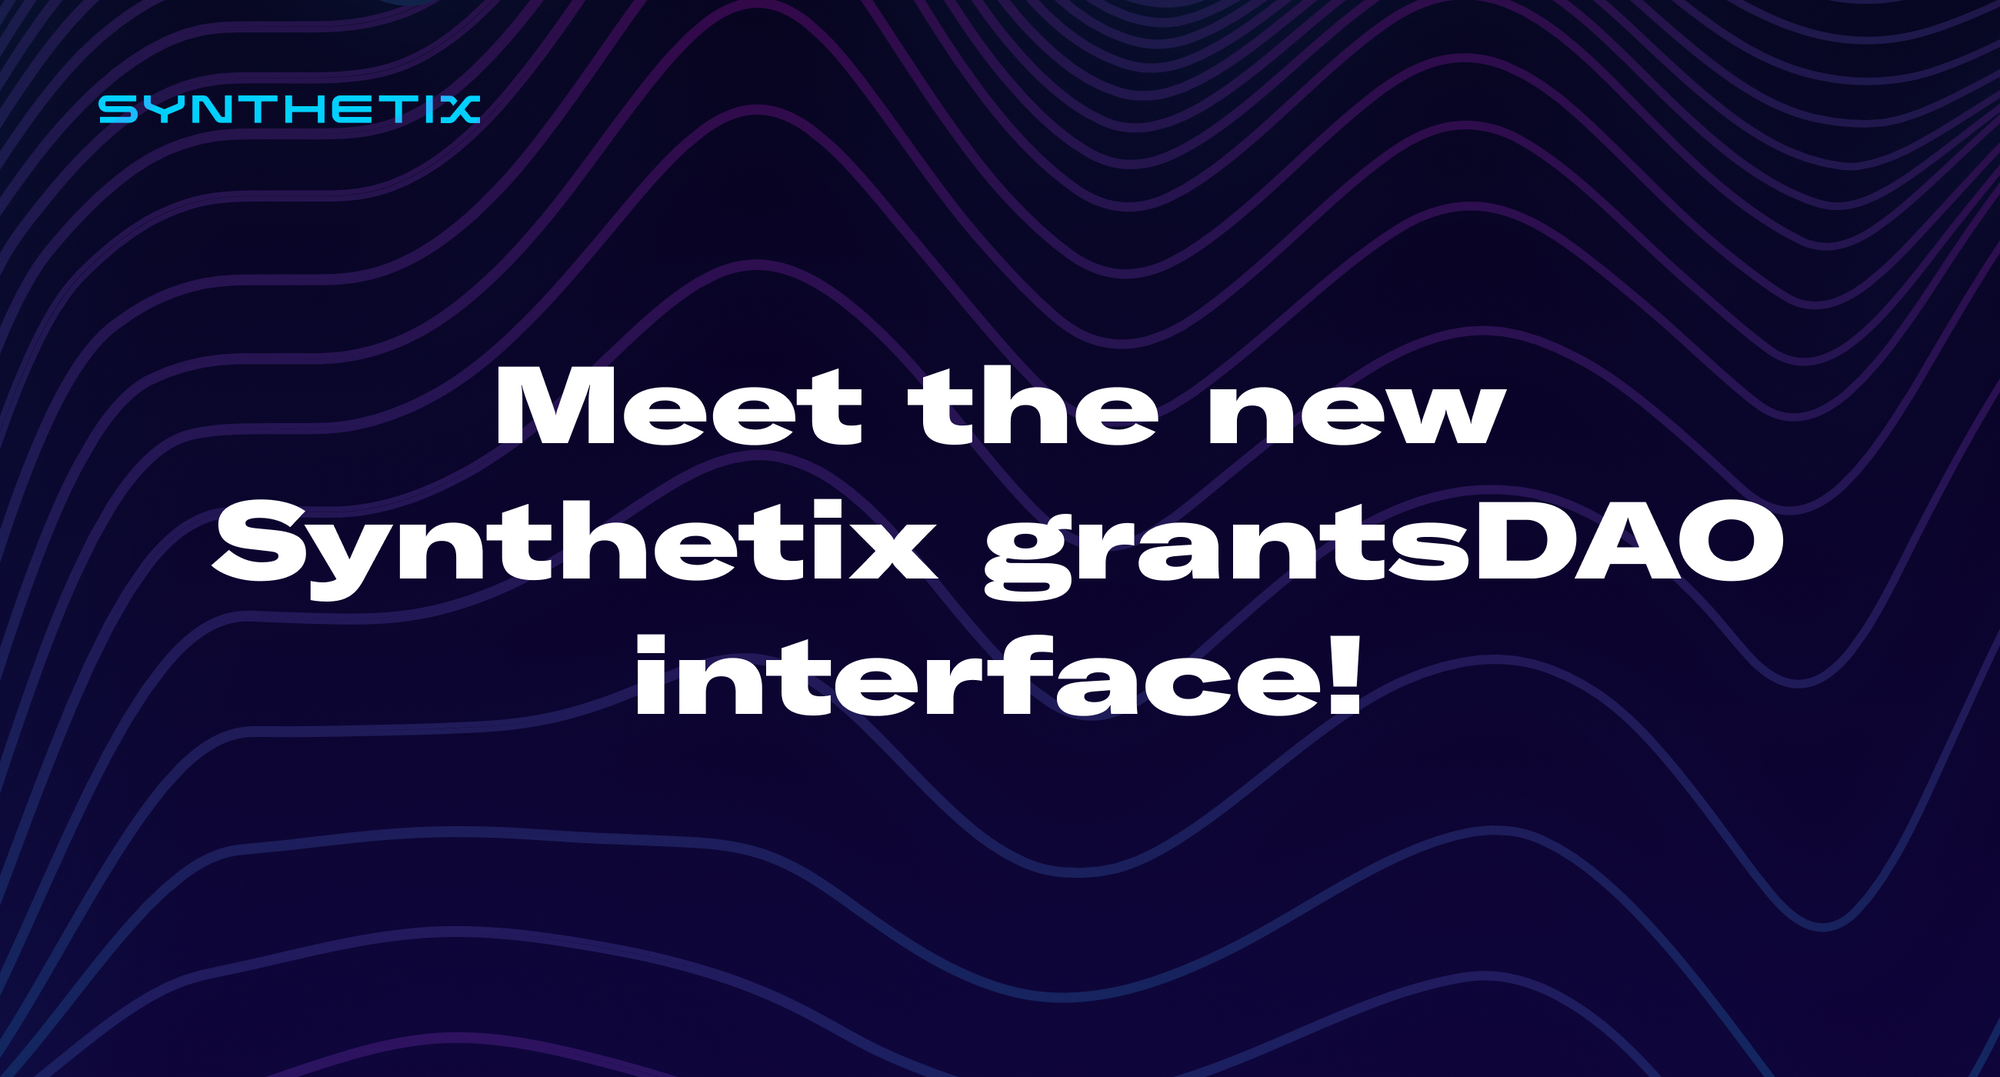 Meet the new Synthetix grantsDAO interface!